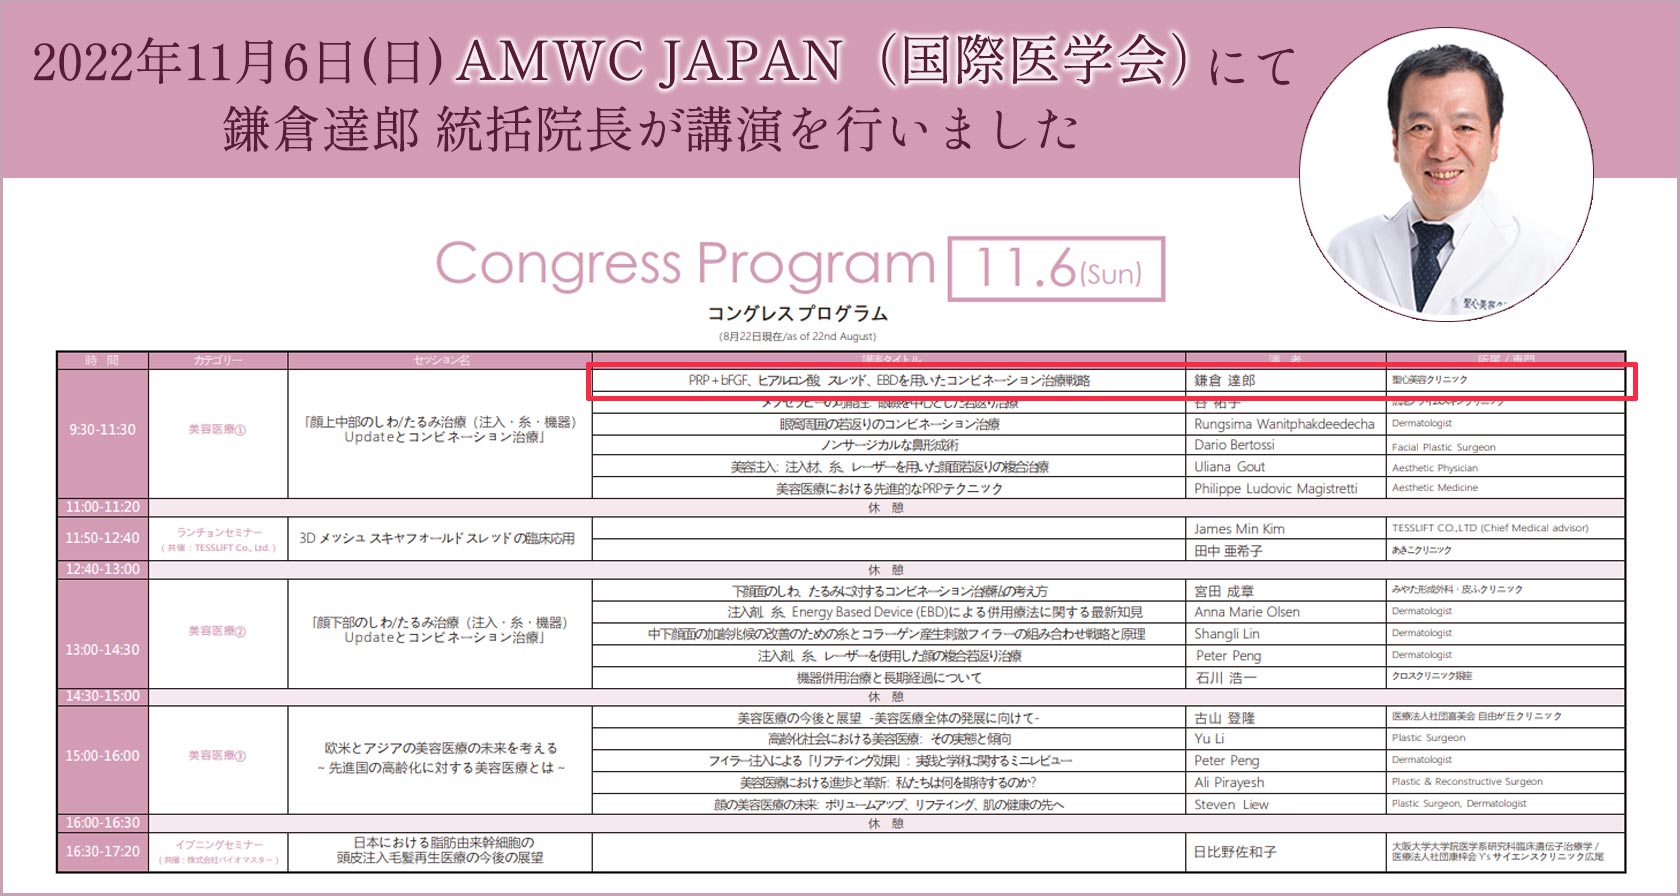 AMWC JAPAN（国際医学会）